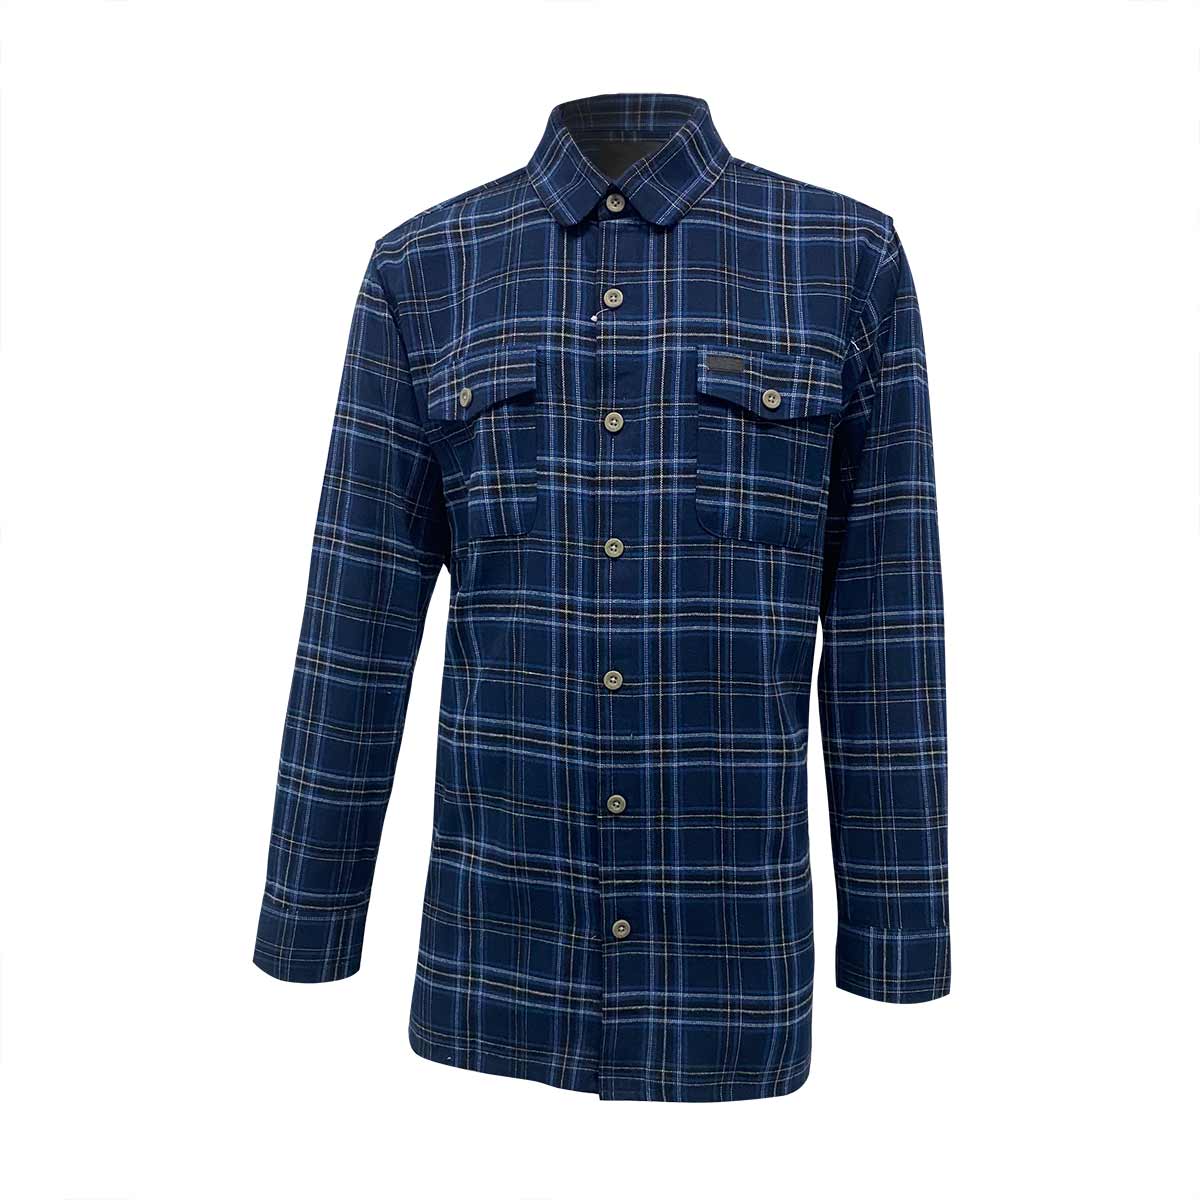 TianYun Men blue plaid cotton and spandex flannel shirt